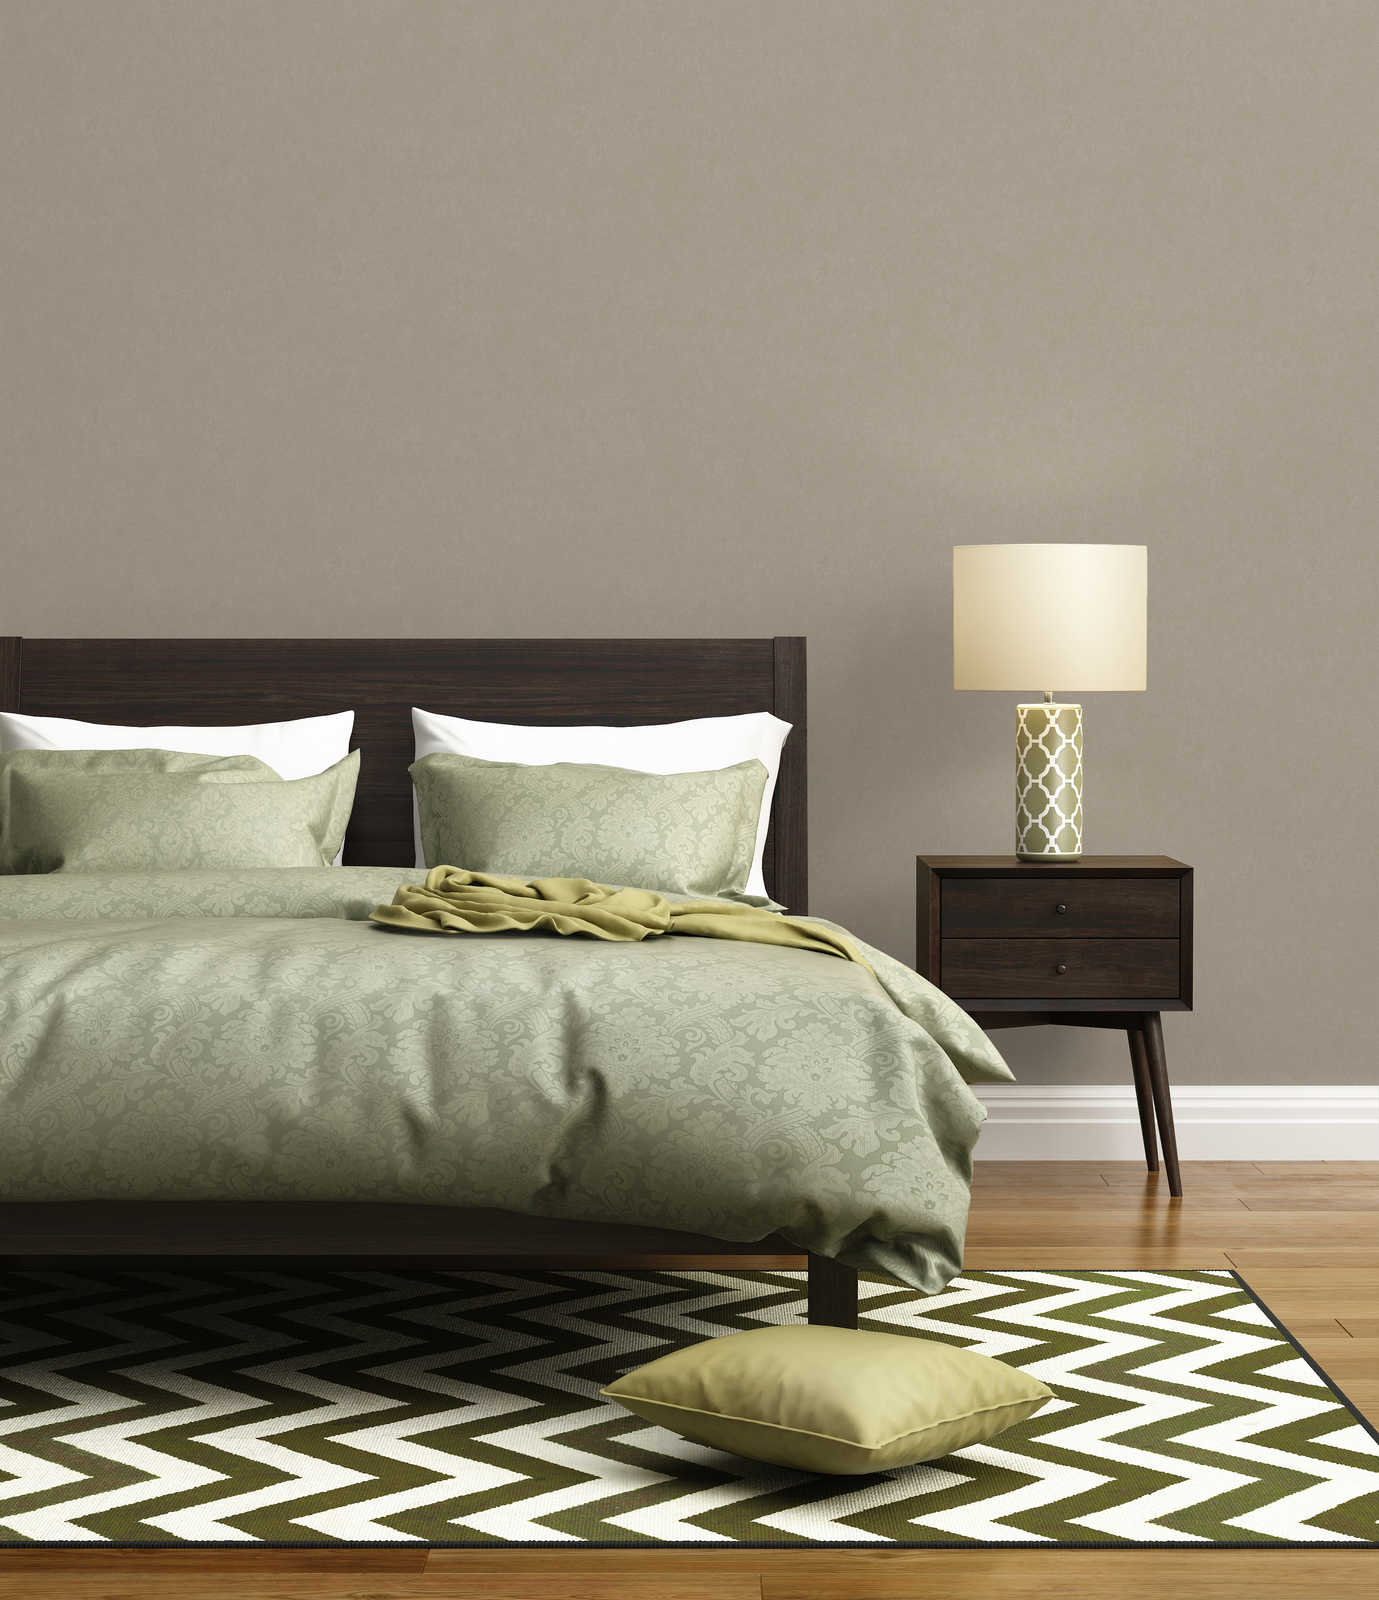             Grey beige wallpaper plain with texture design
        